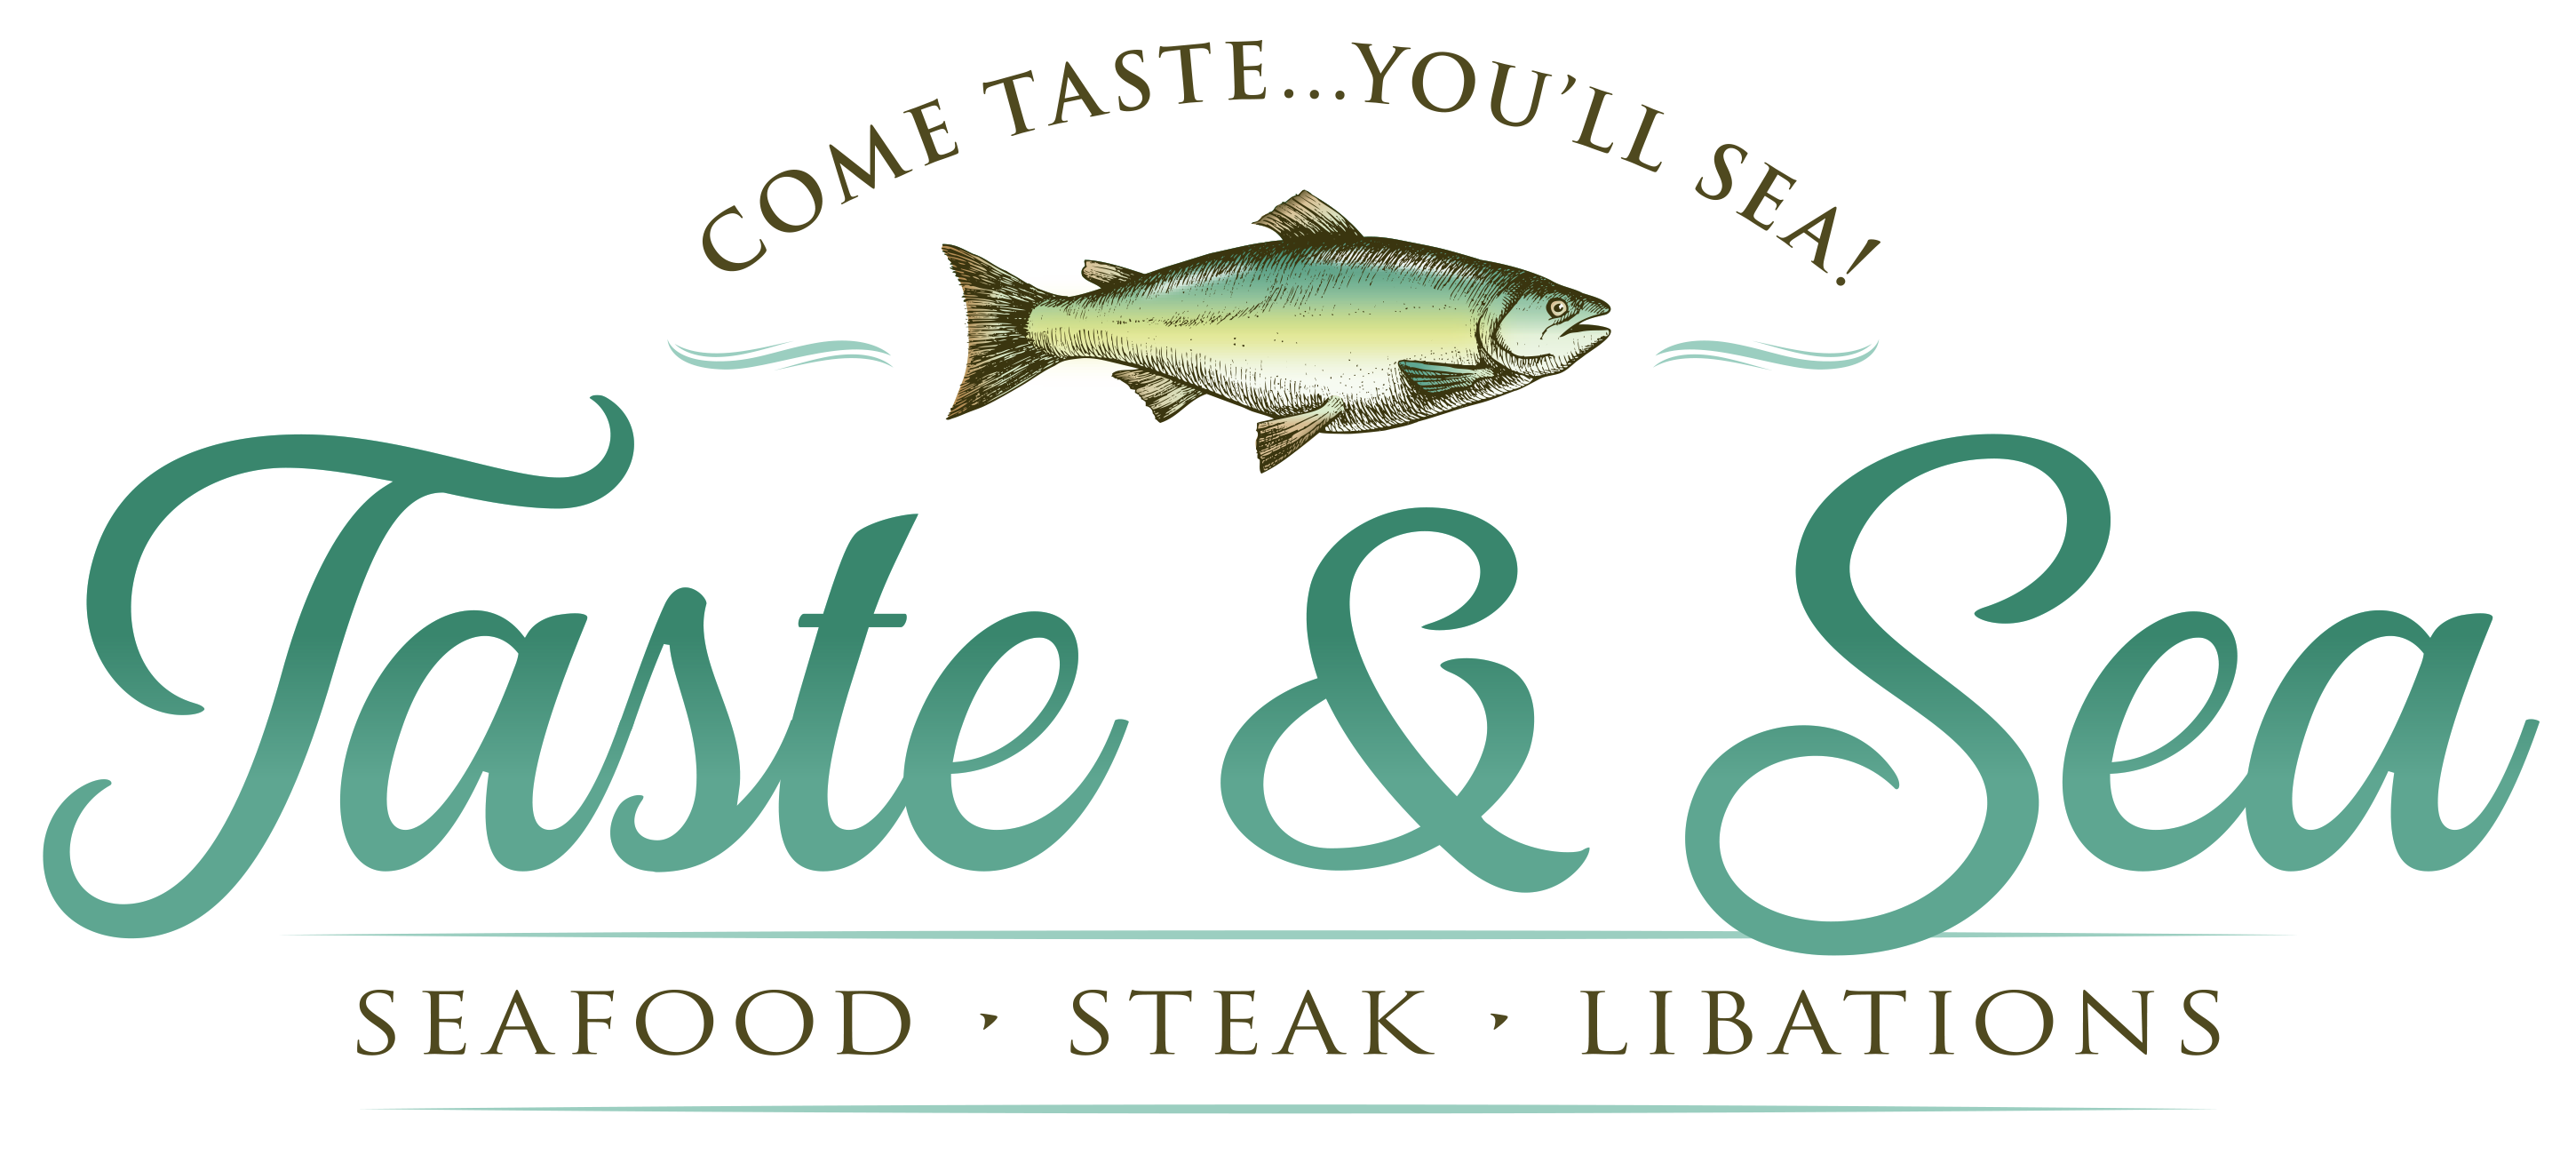 Taste & Sea - Come Taste... You'll Sea!